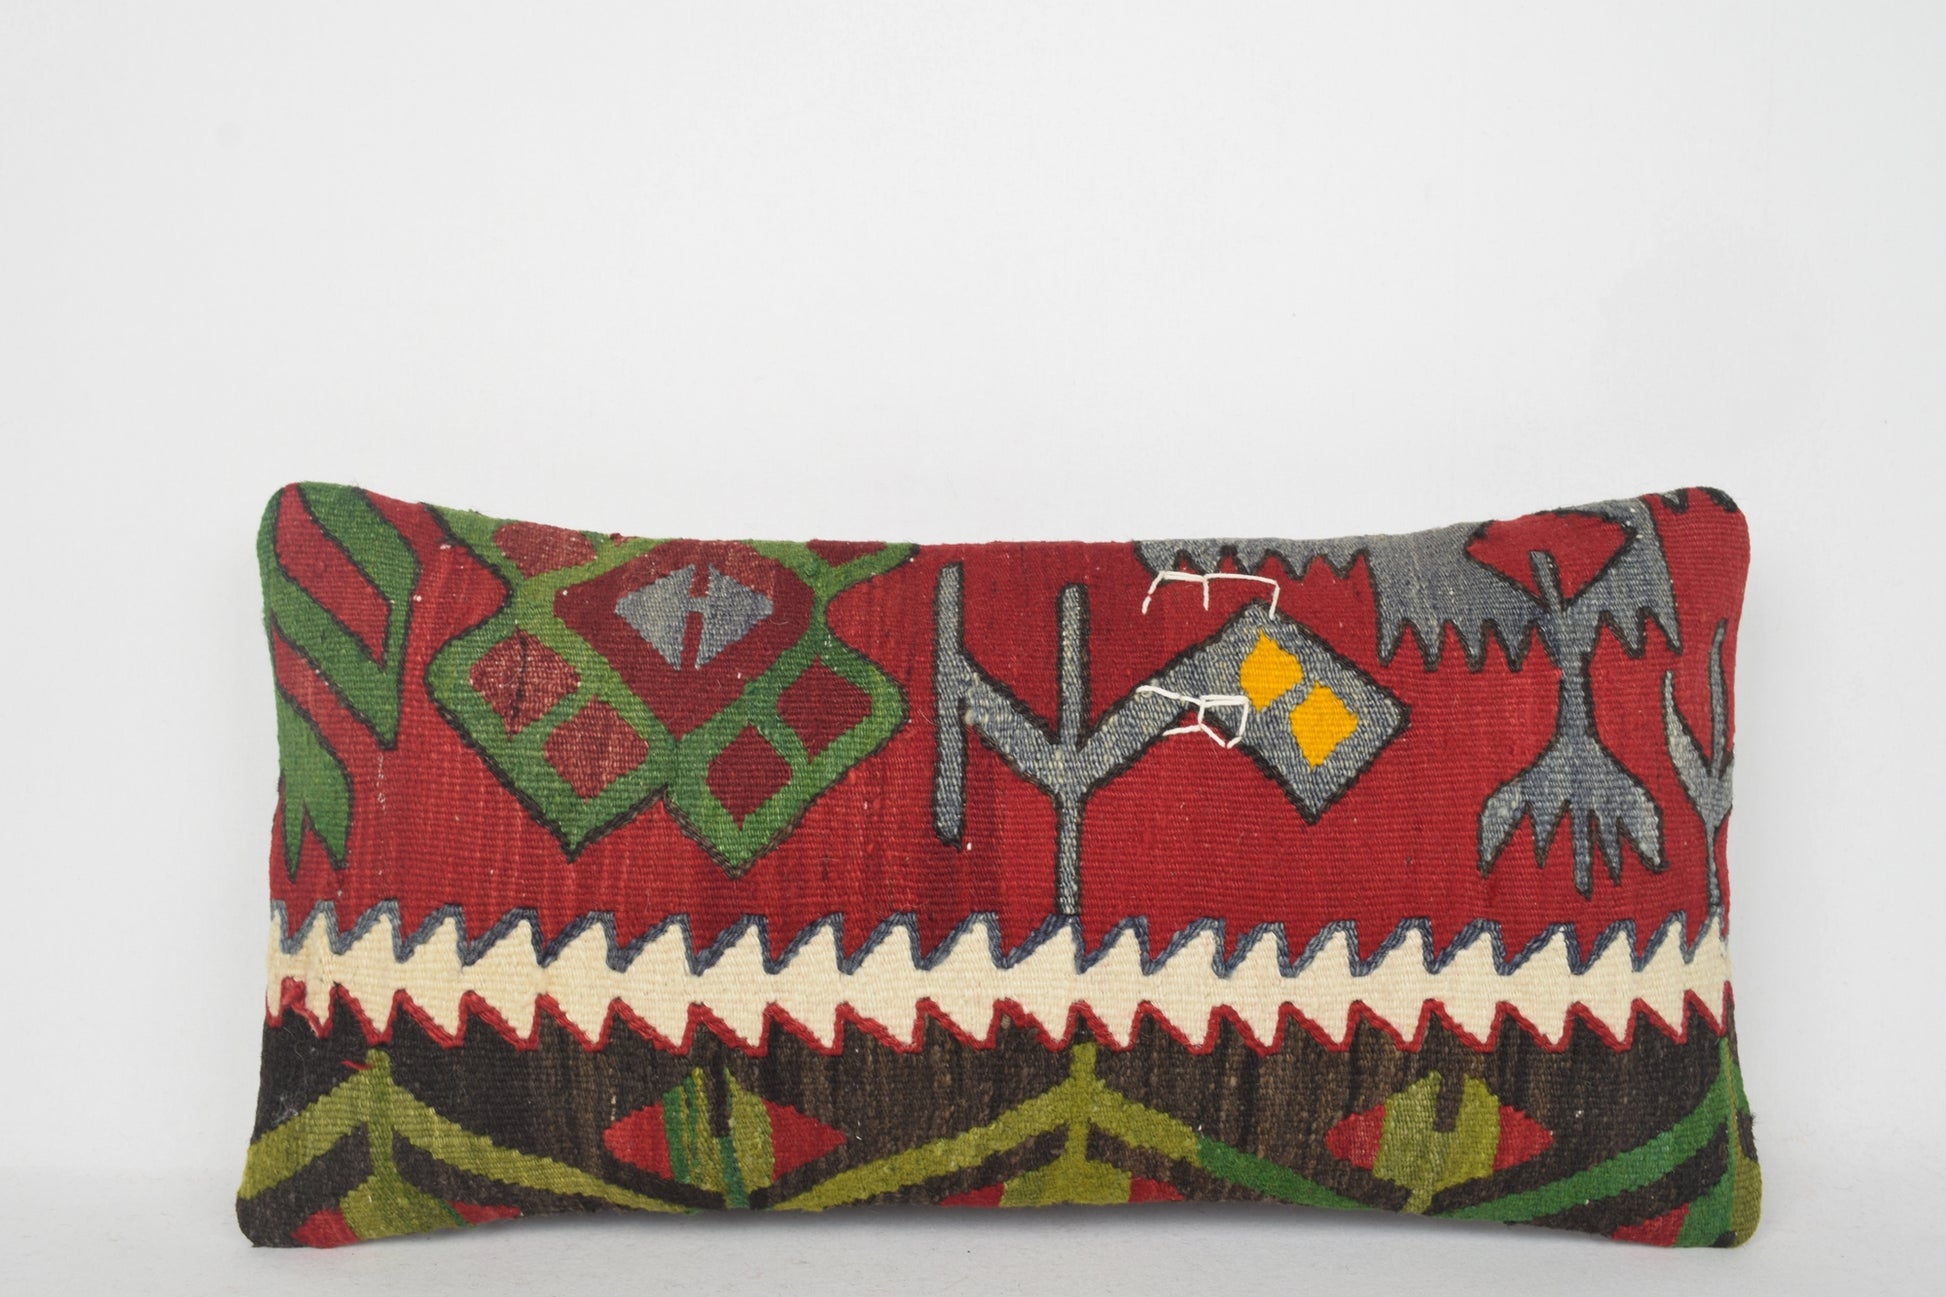 Kilim Cushion Covers Australia, Turkish Rugs Wikipedia Pillow F00127 12x24 " - 30x60 cm.